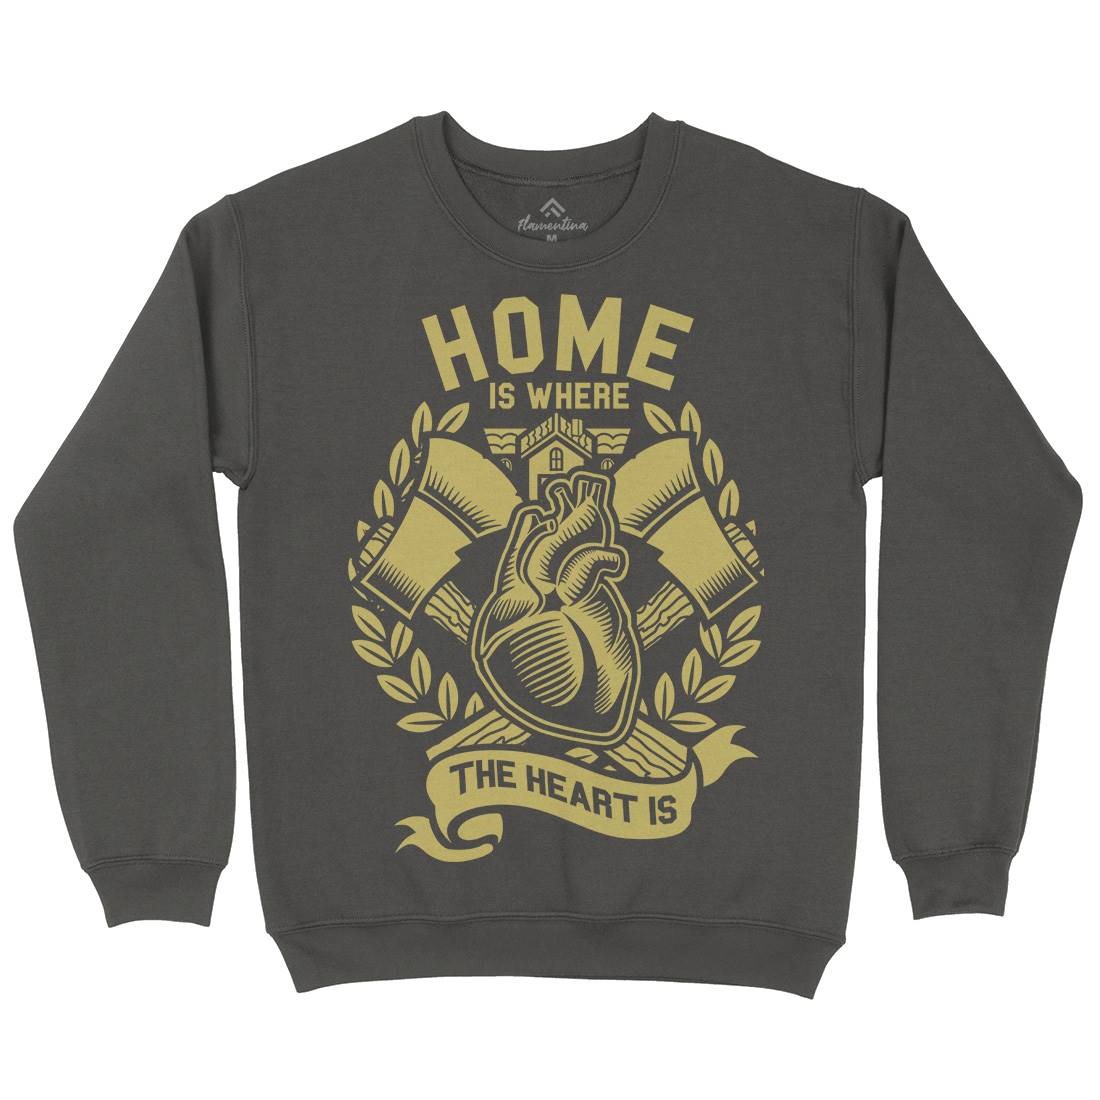 Home Kids Crew Neck Sweatshirt Quotes A241